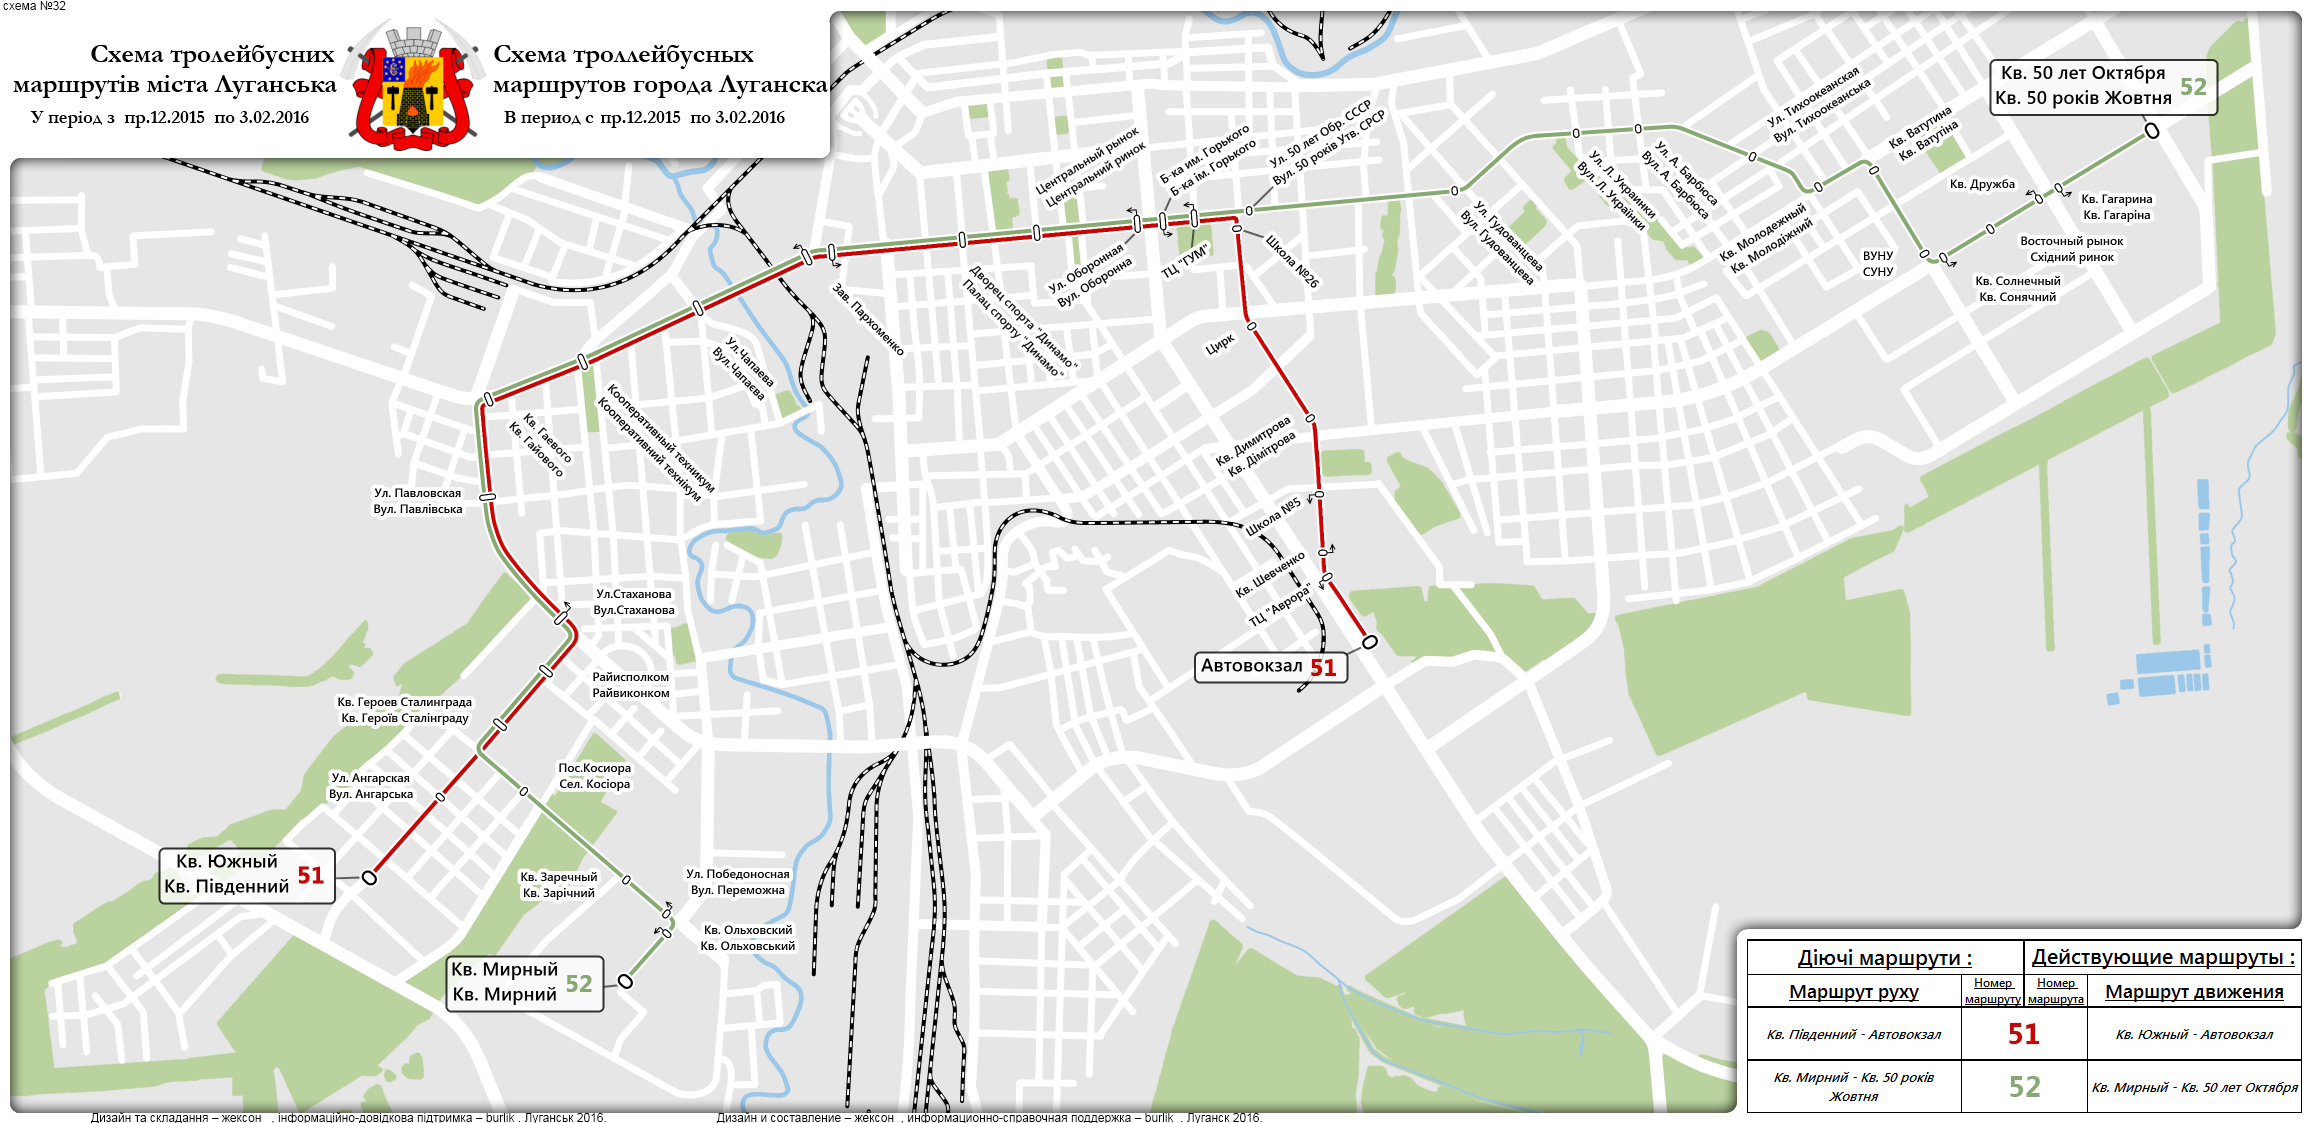 Luhanskas — Historic Mas of Trolleybus Routes